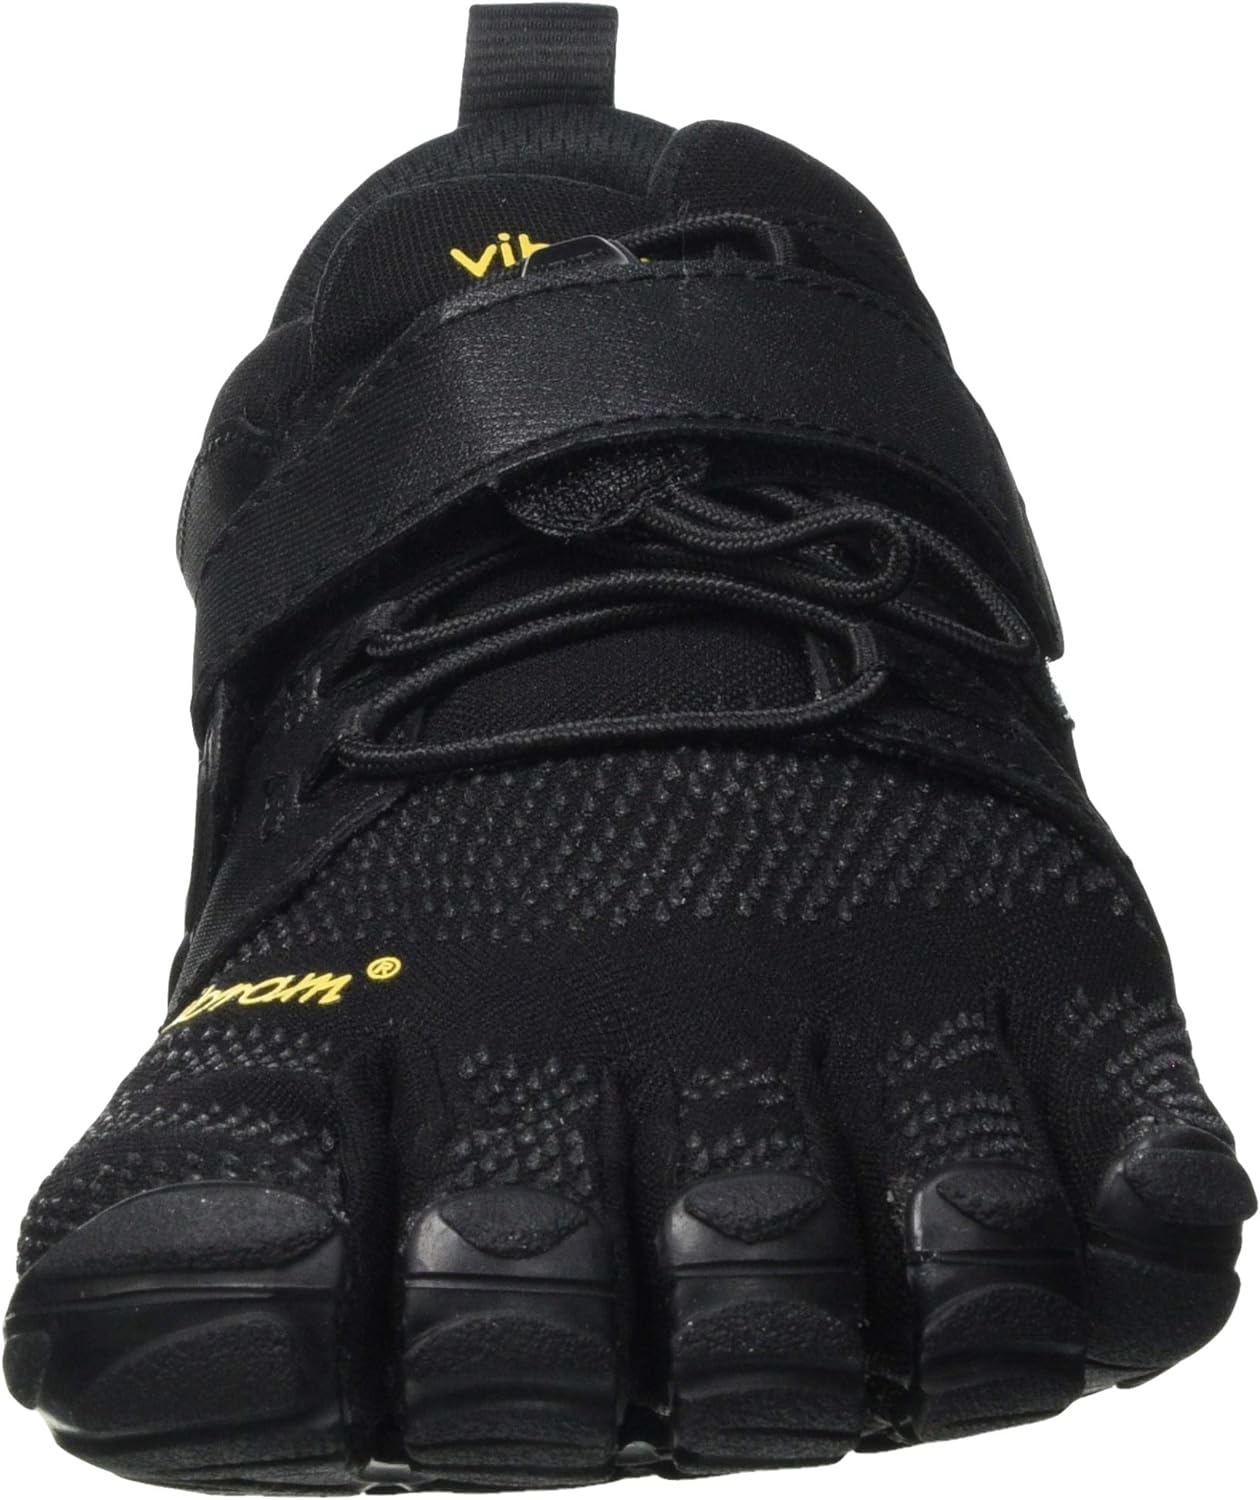 Vibram Five Fingers Men's V-Train 2.0 Shoe - image 2 of 7